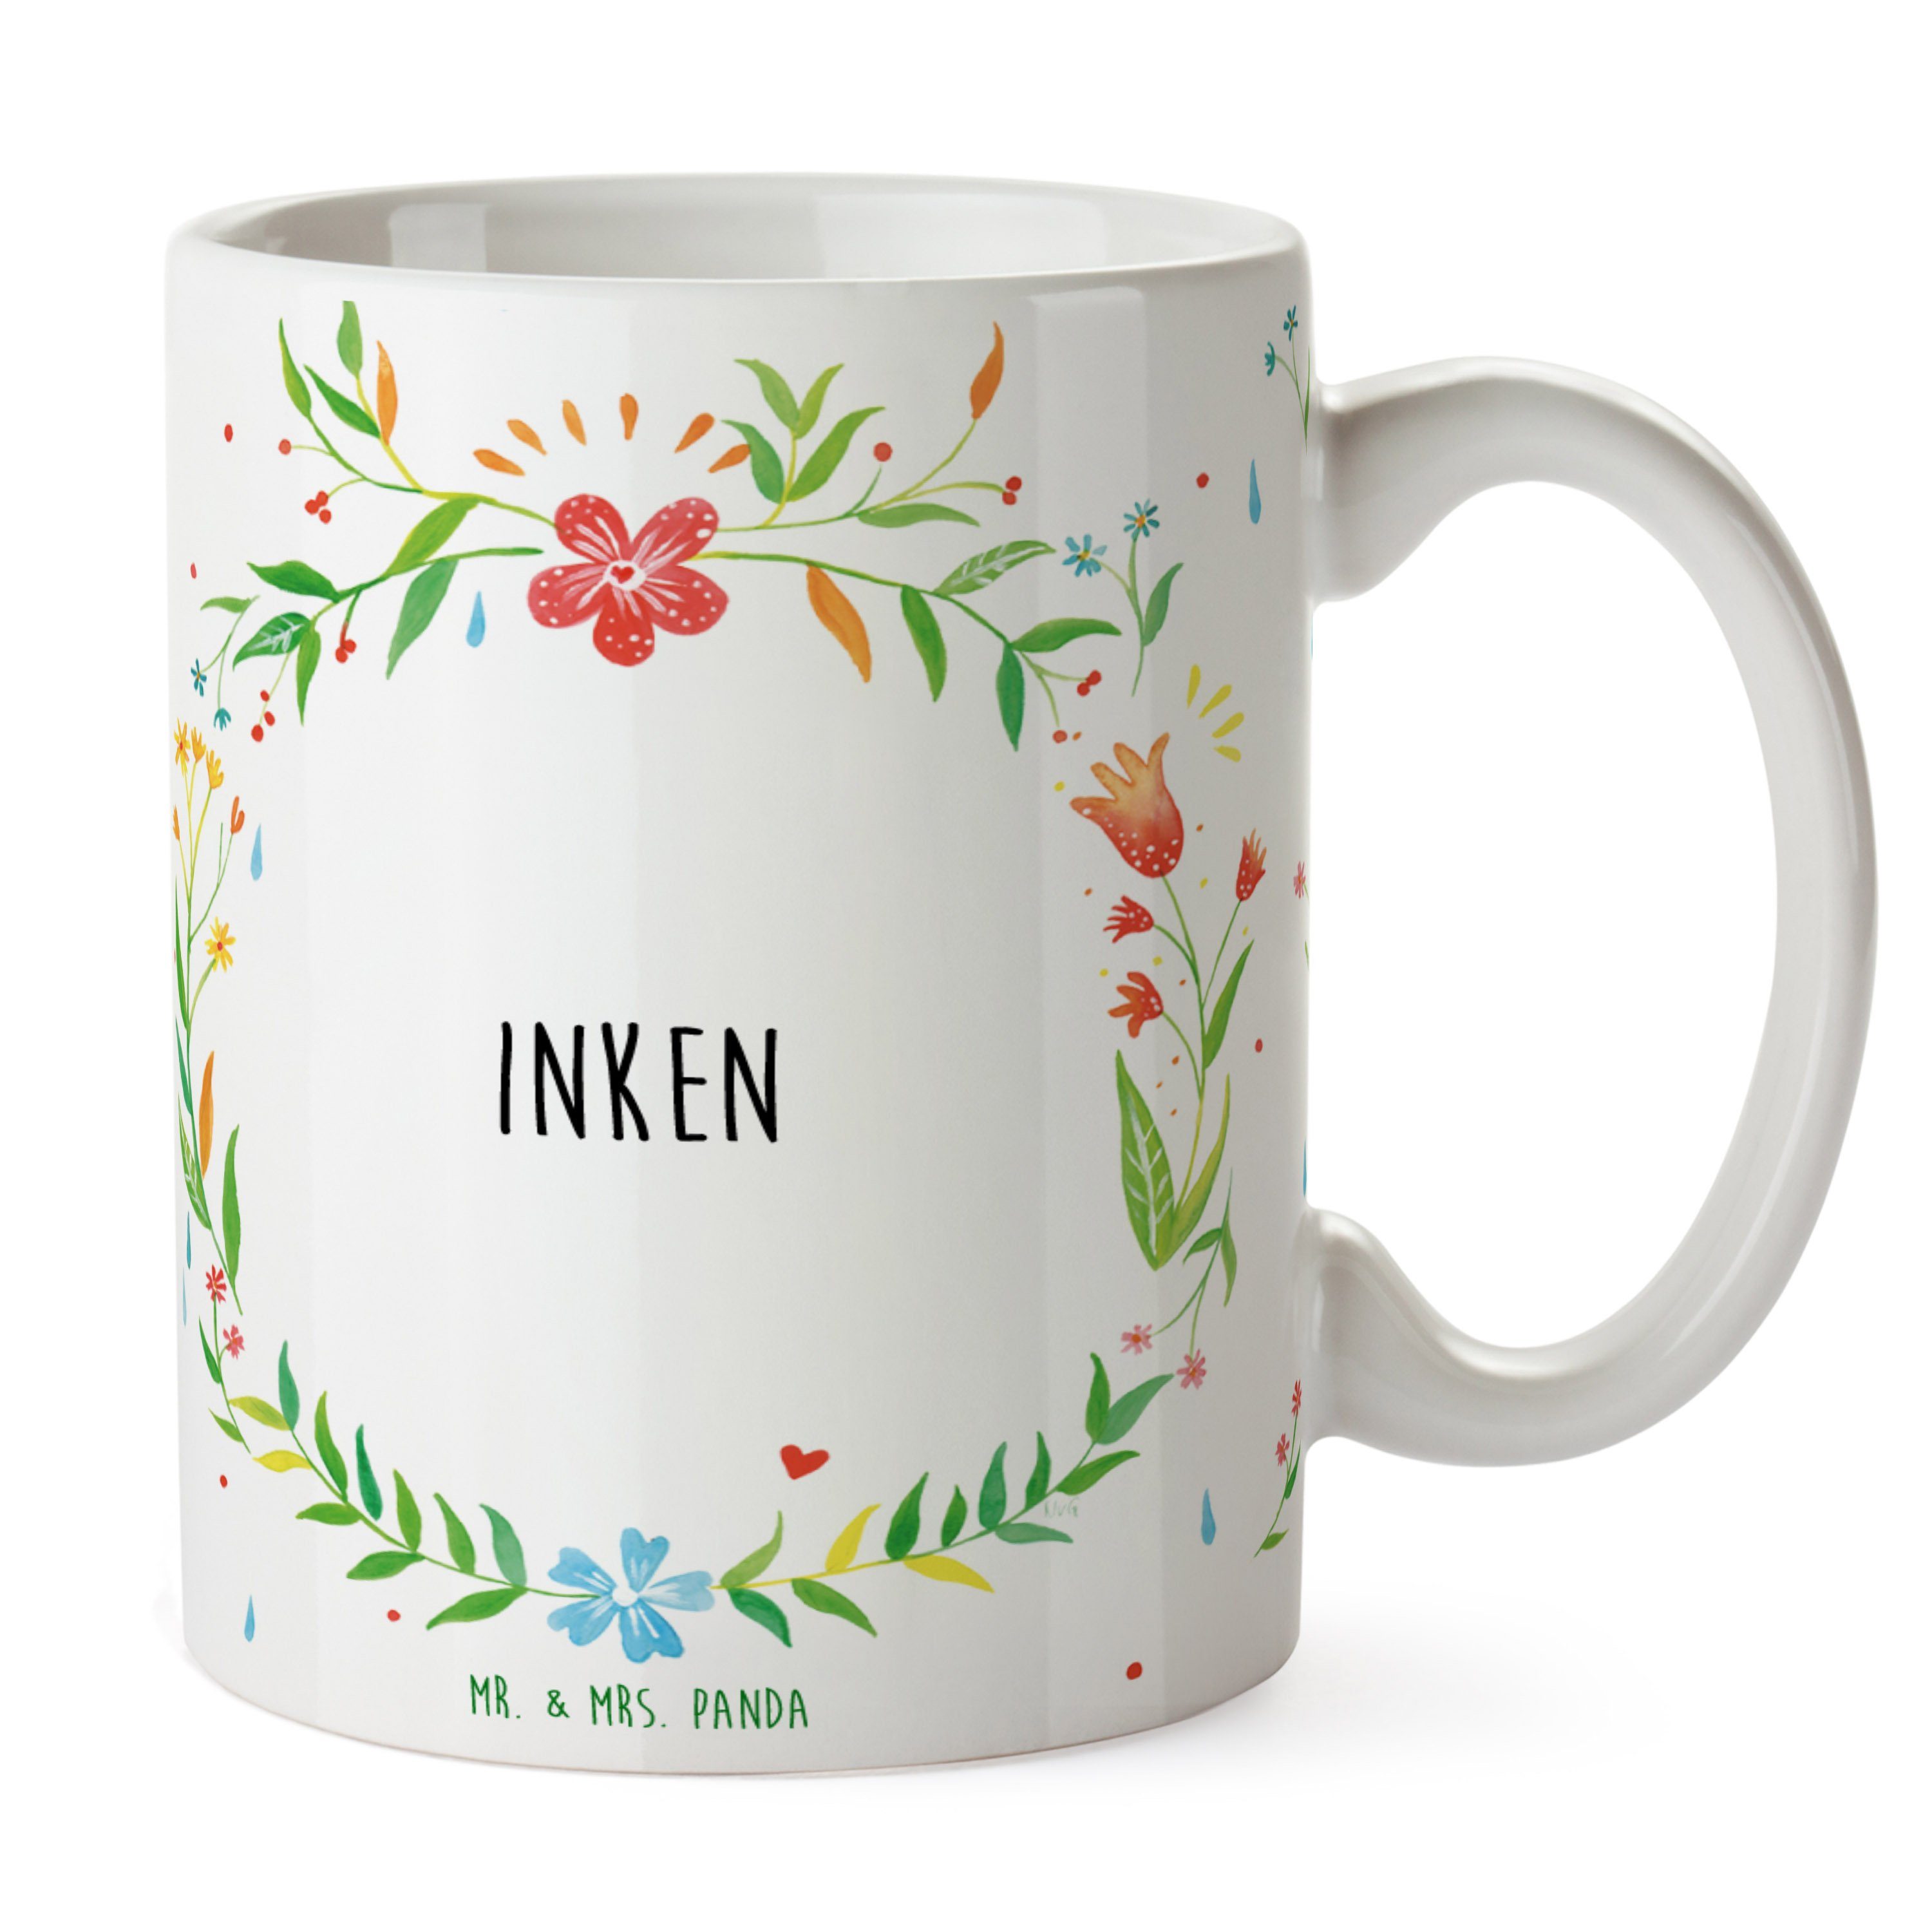 Geschenk, Keramik Tasse Inken Motive, Teetasse, - Tasse Panda Tasse Sprüche, Kaffeetasse, & Mrs. Mr.